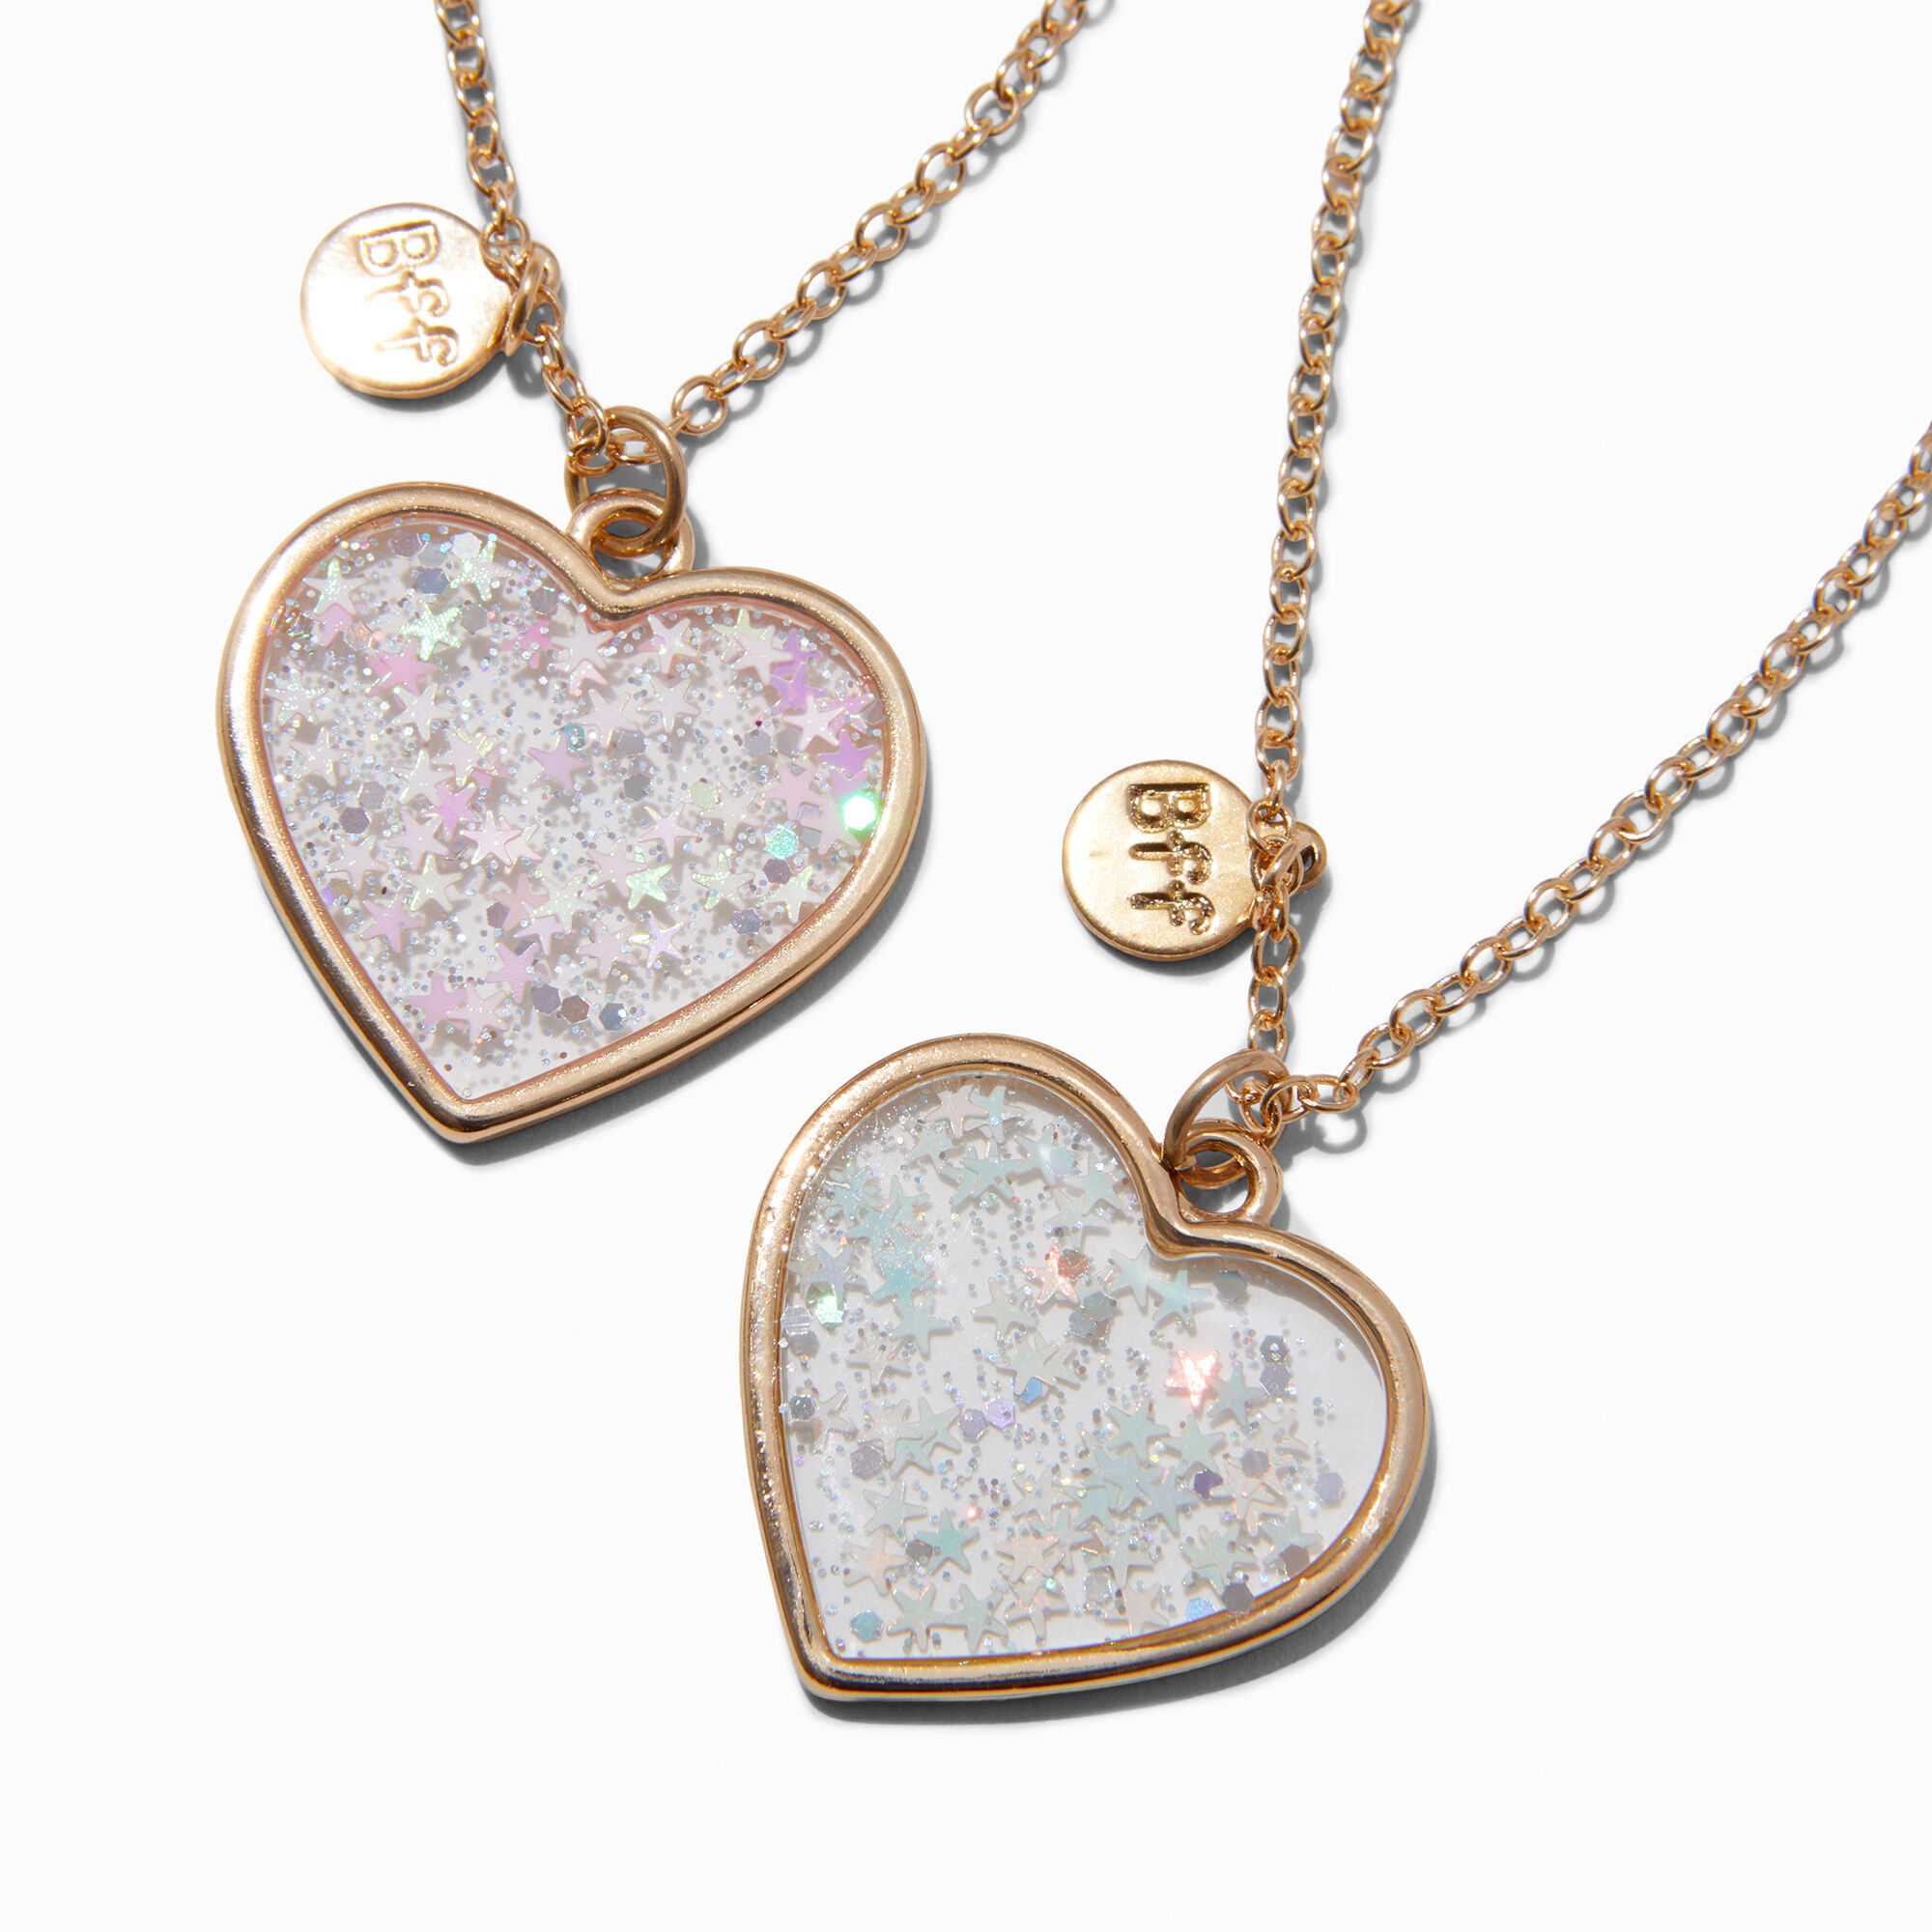 View Claires Best Friends Celestial Shaker Heart Pendant Necklaces 2 Pack Gold information